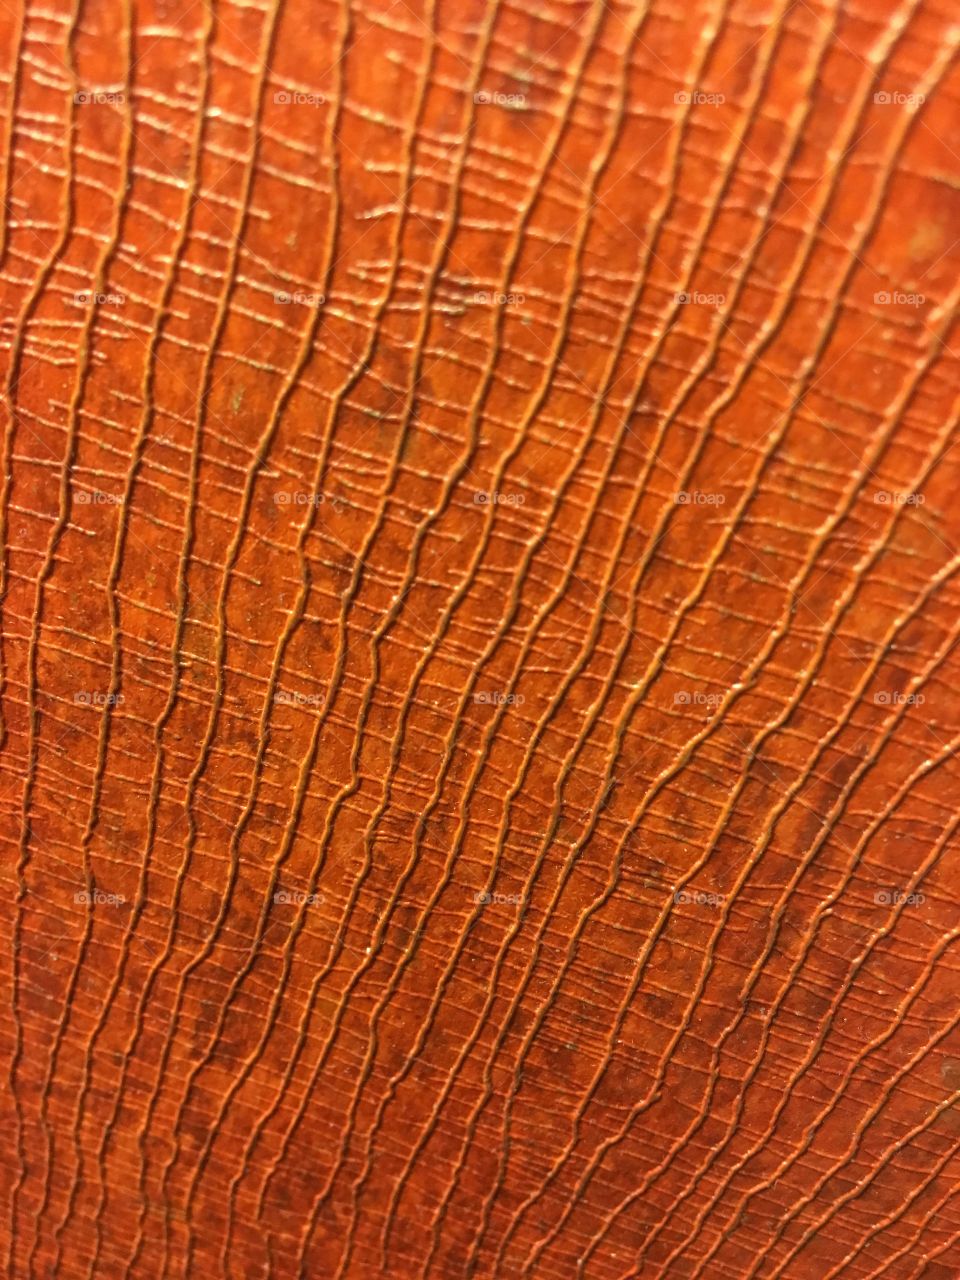 Close-up of creative textures